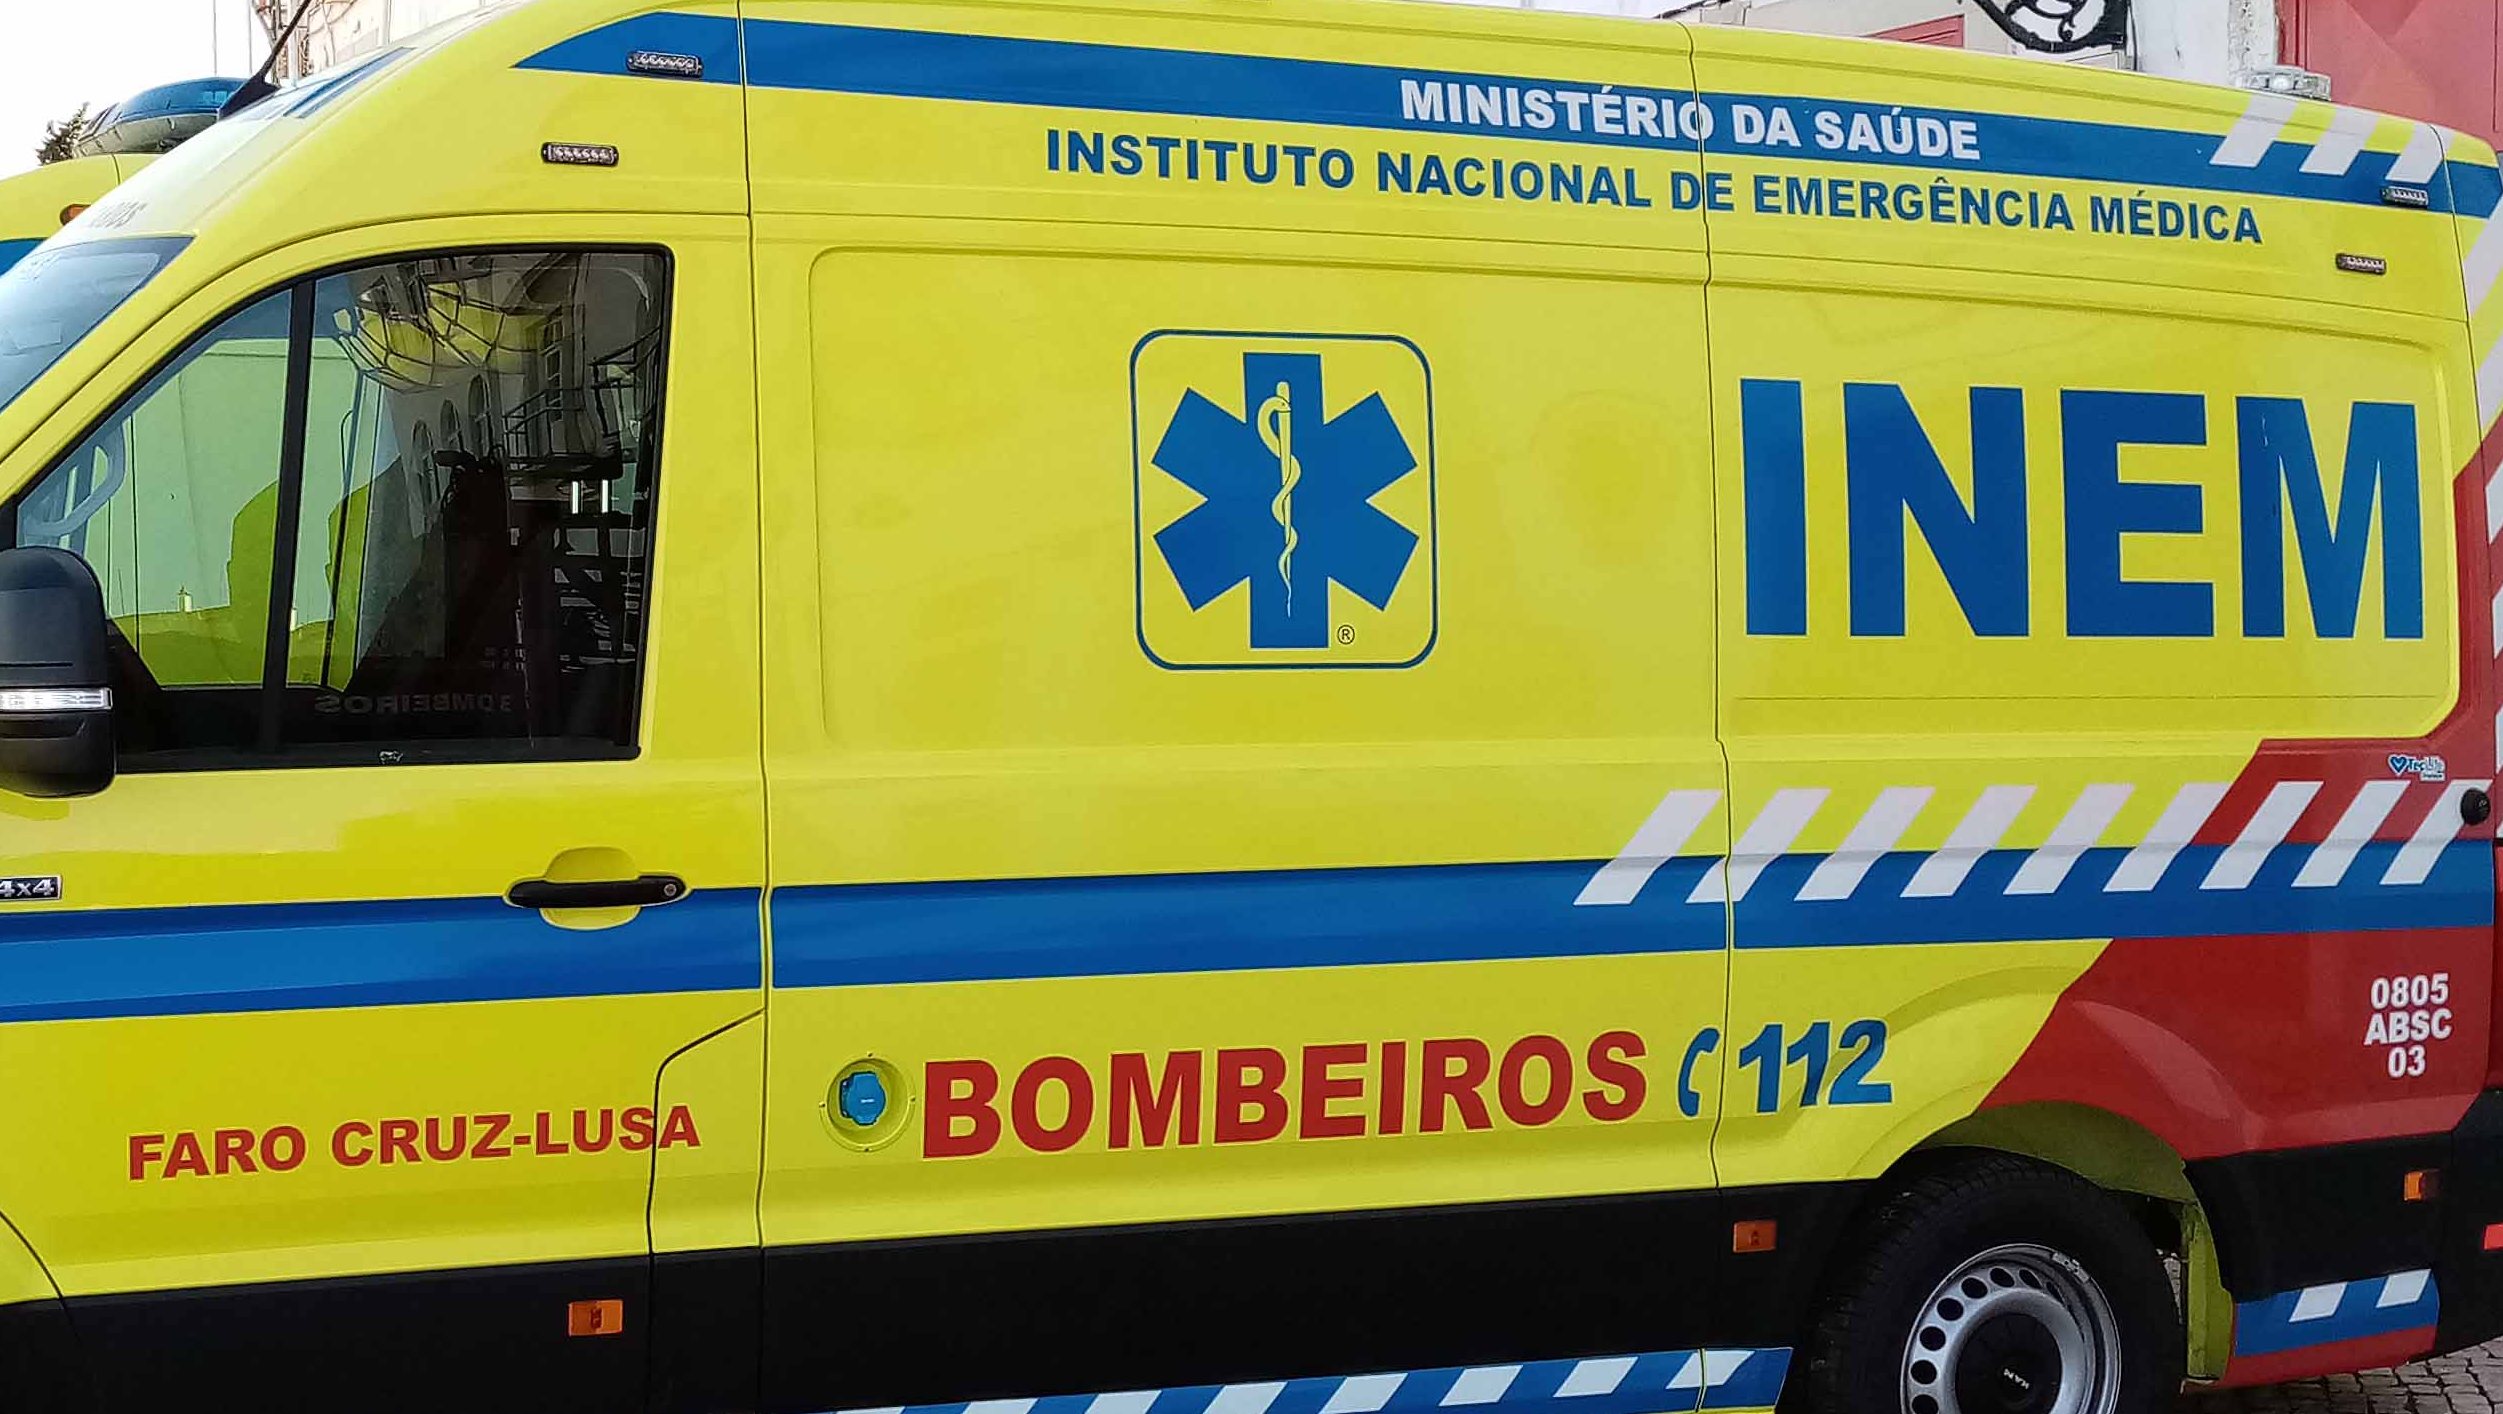 Portuguese Ambulance Land Vehicle Scene In Faro Algarve Portugal Europe